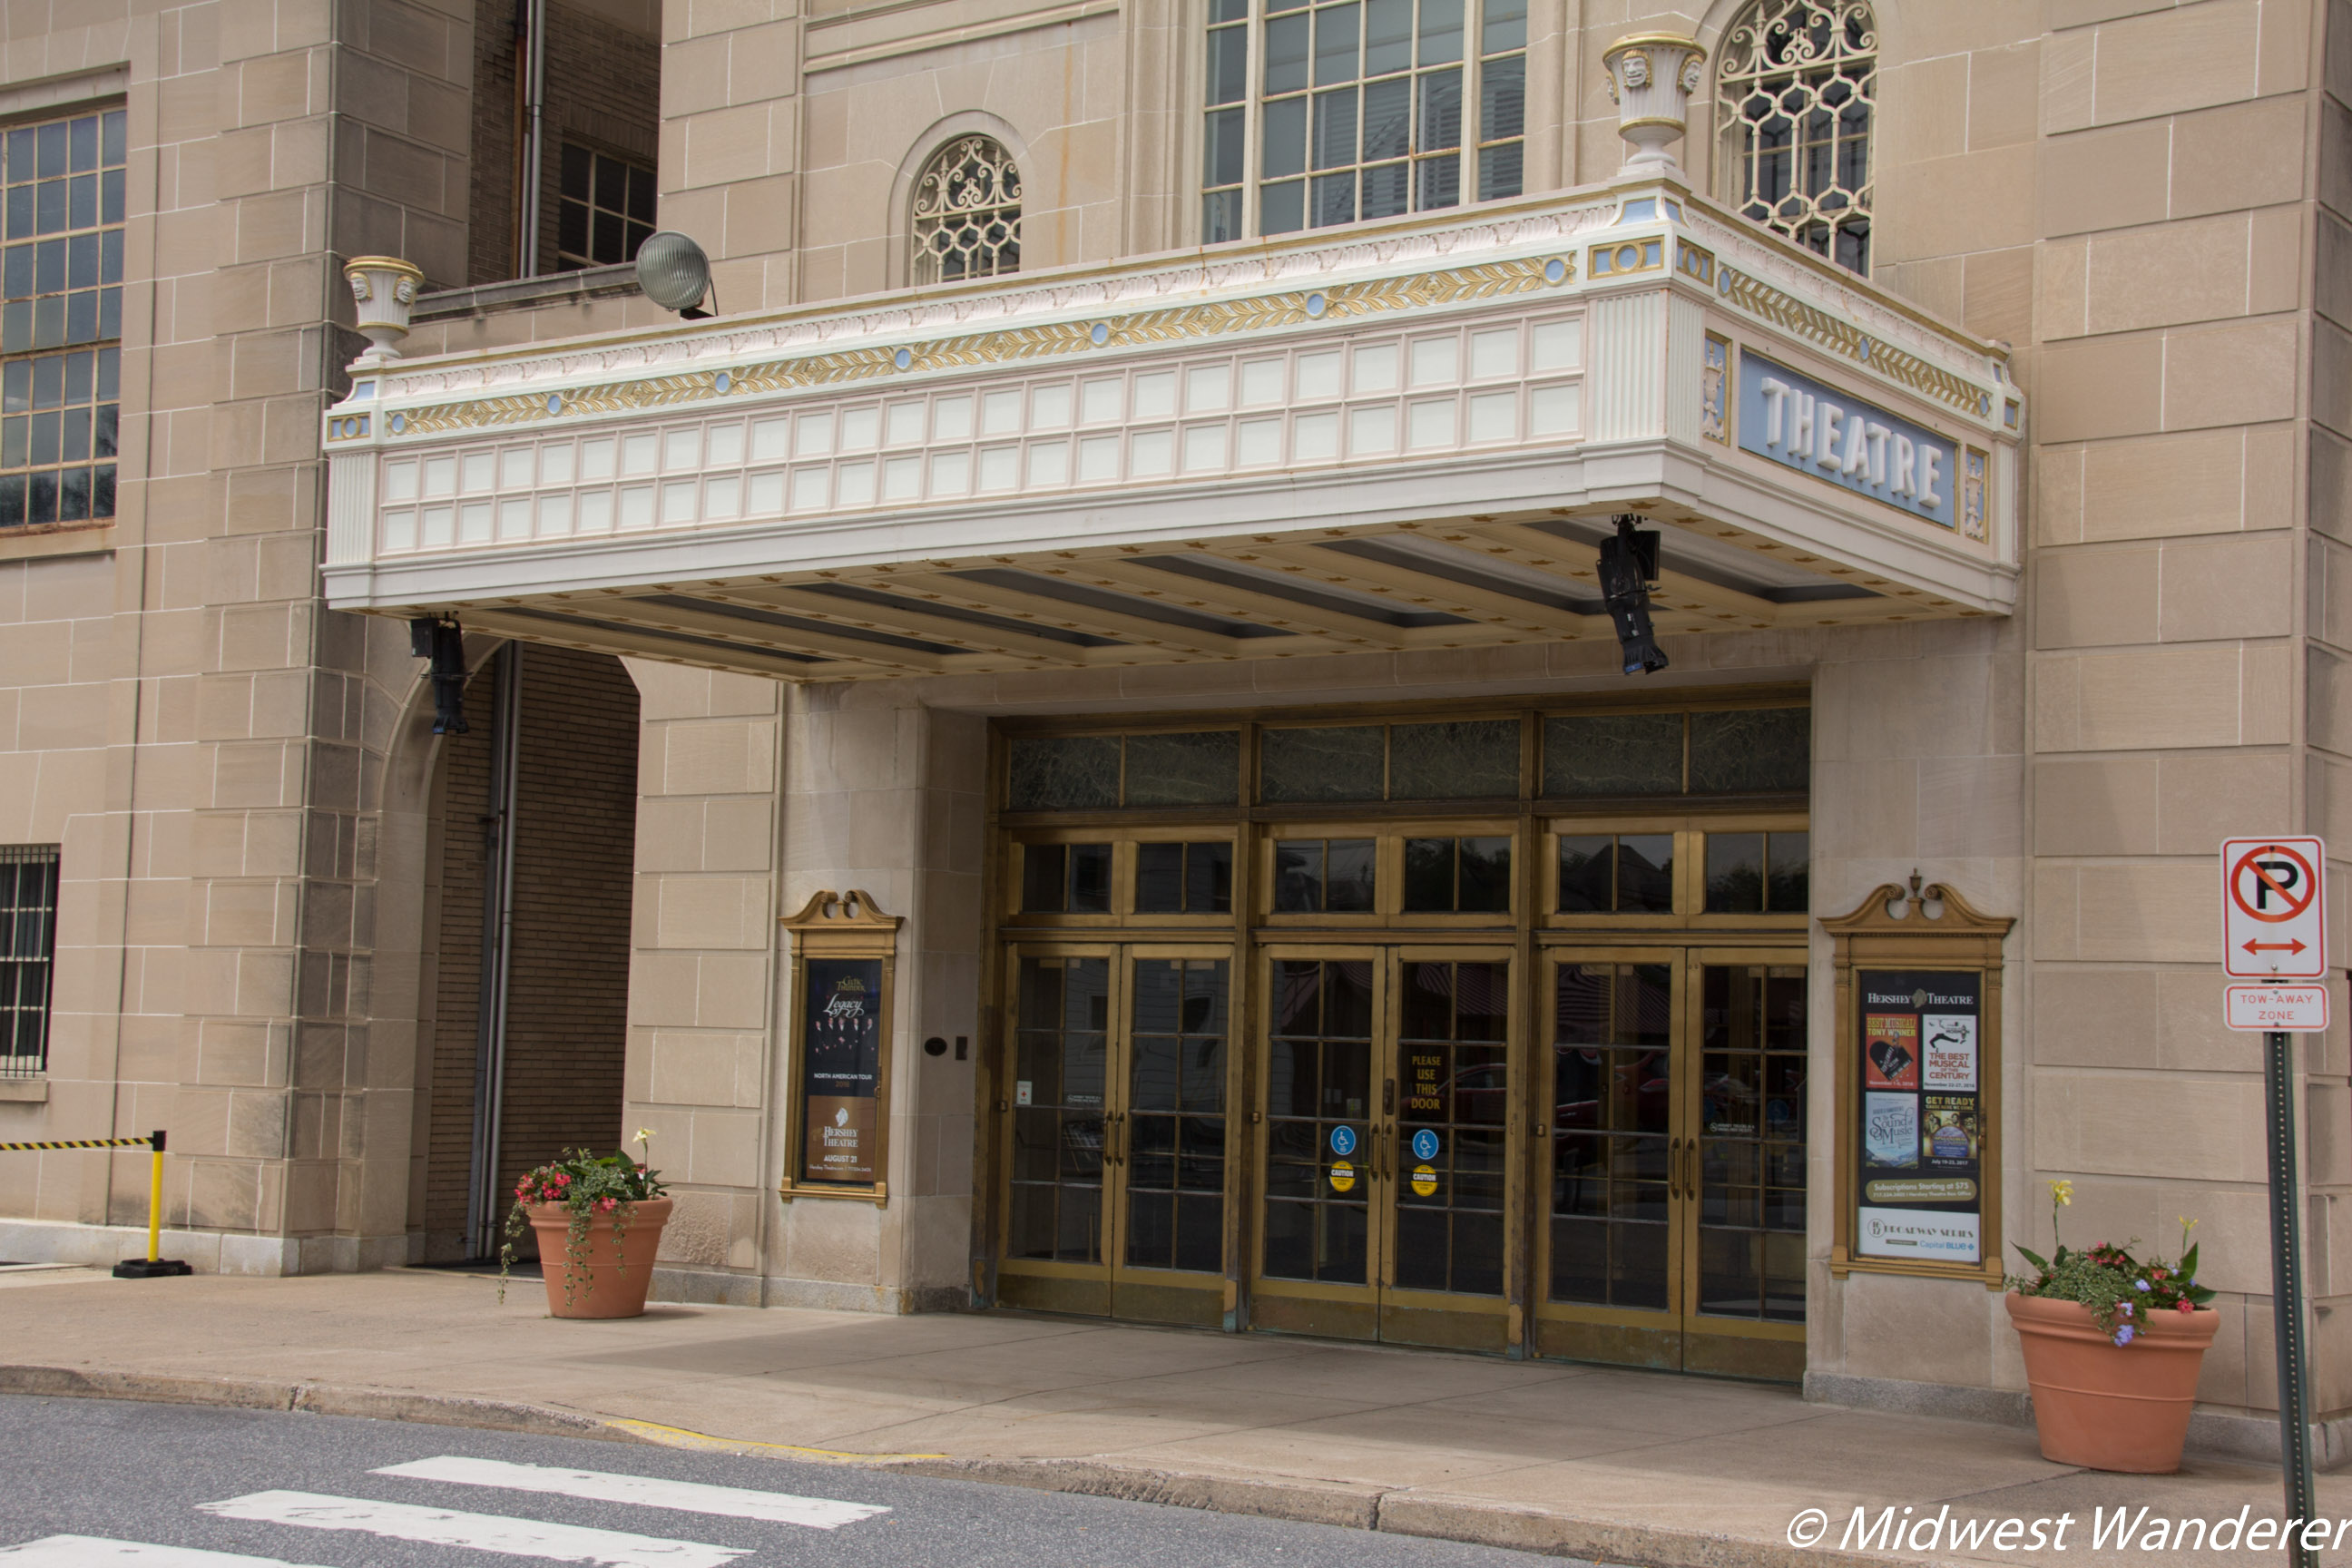 Hershey Theatre entrance